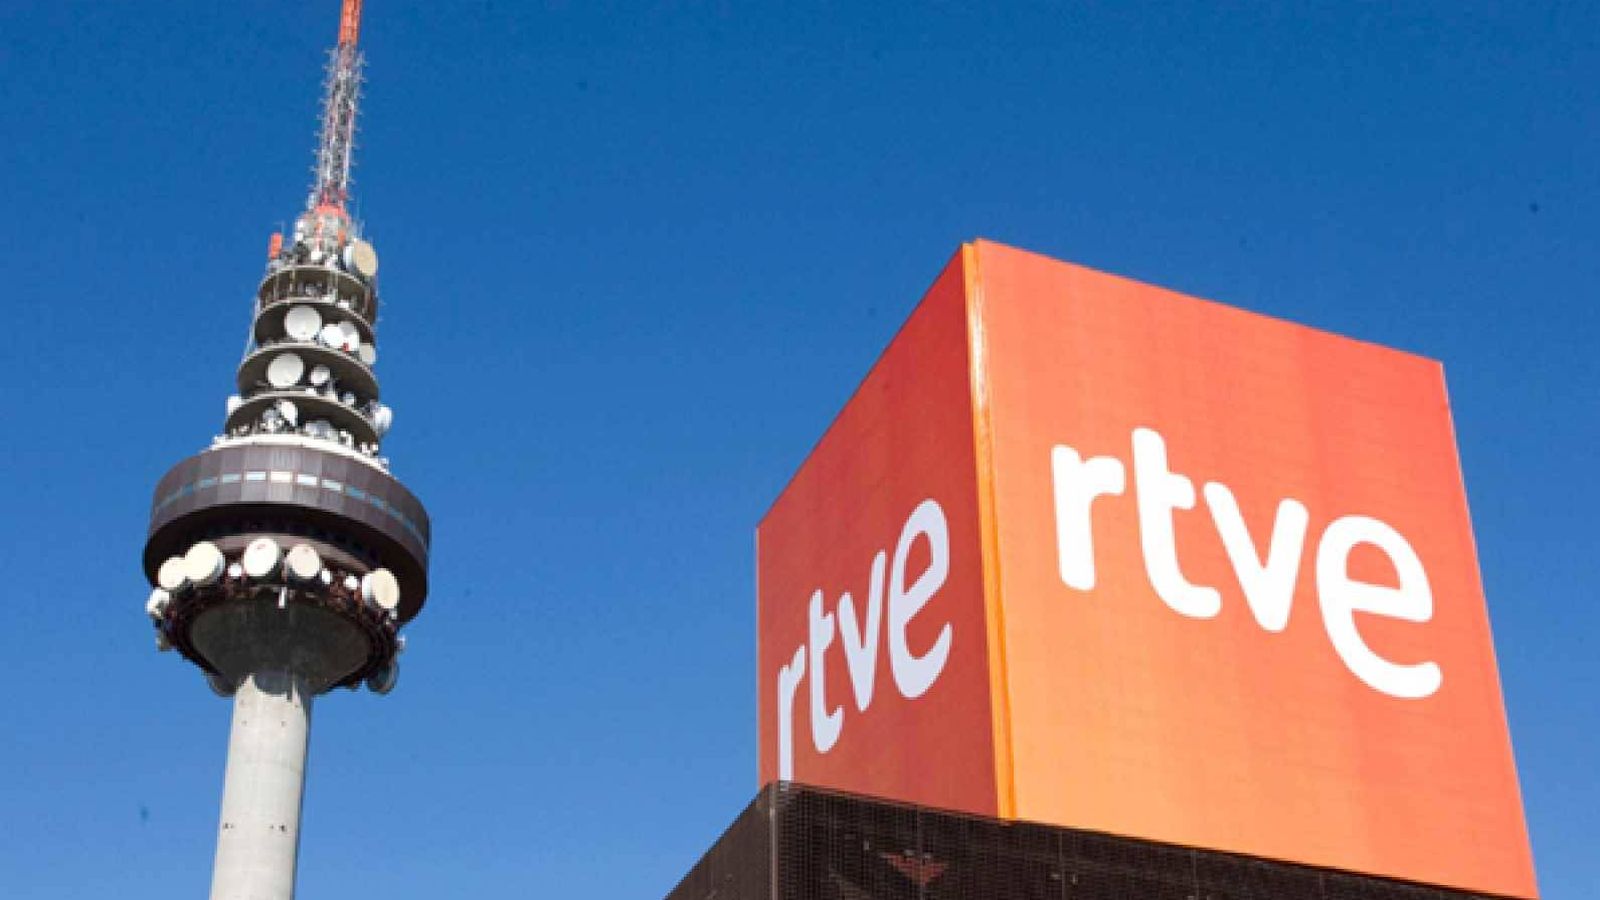 Foto: La sede de RTVE en Torrespaña. (RTVE)